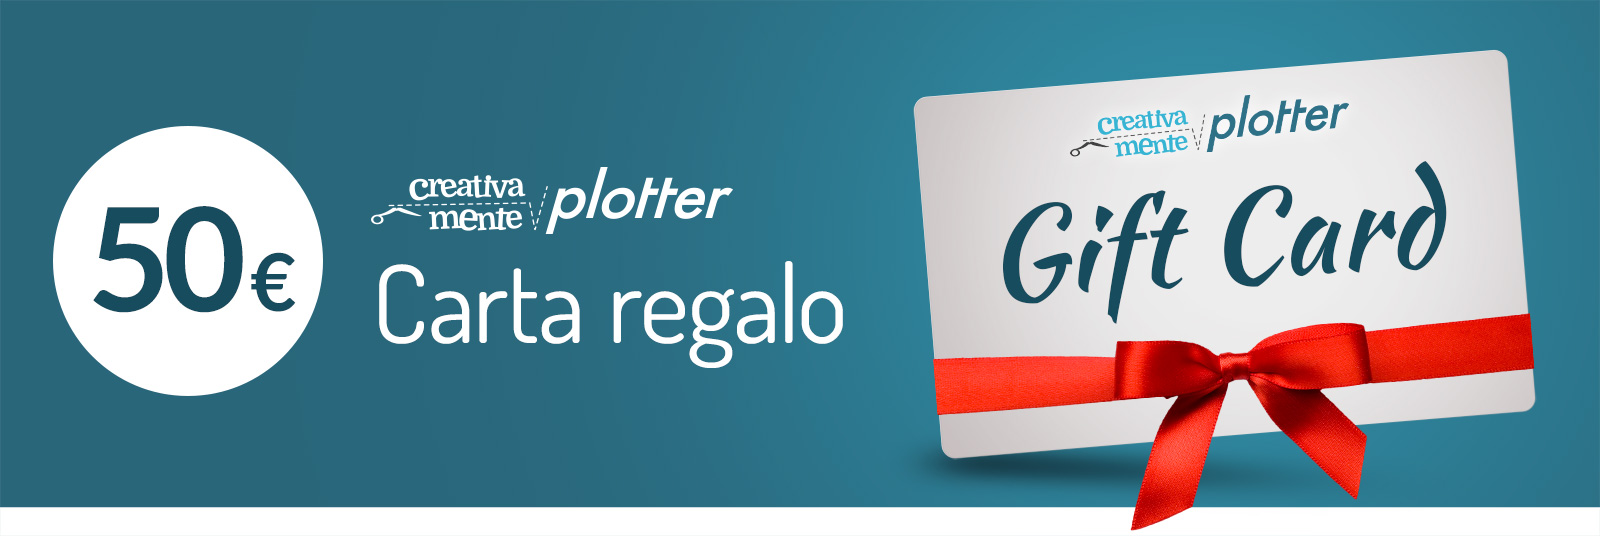 Gift-Card-2021-Creativamente-Plotter-50